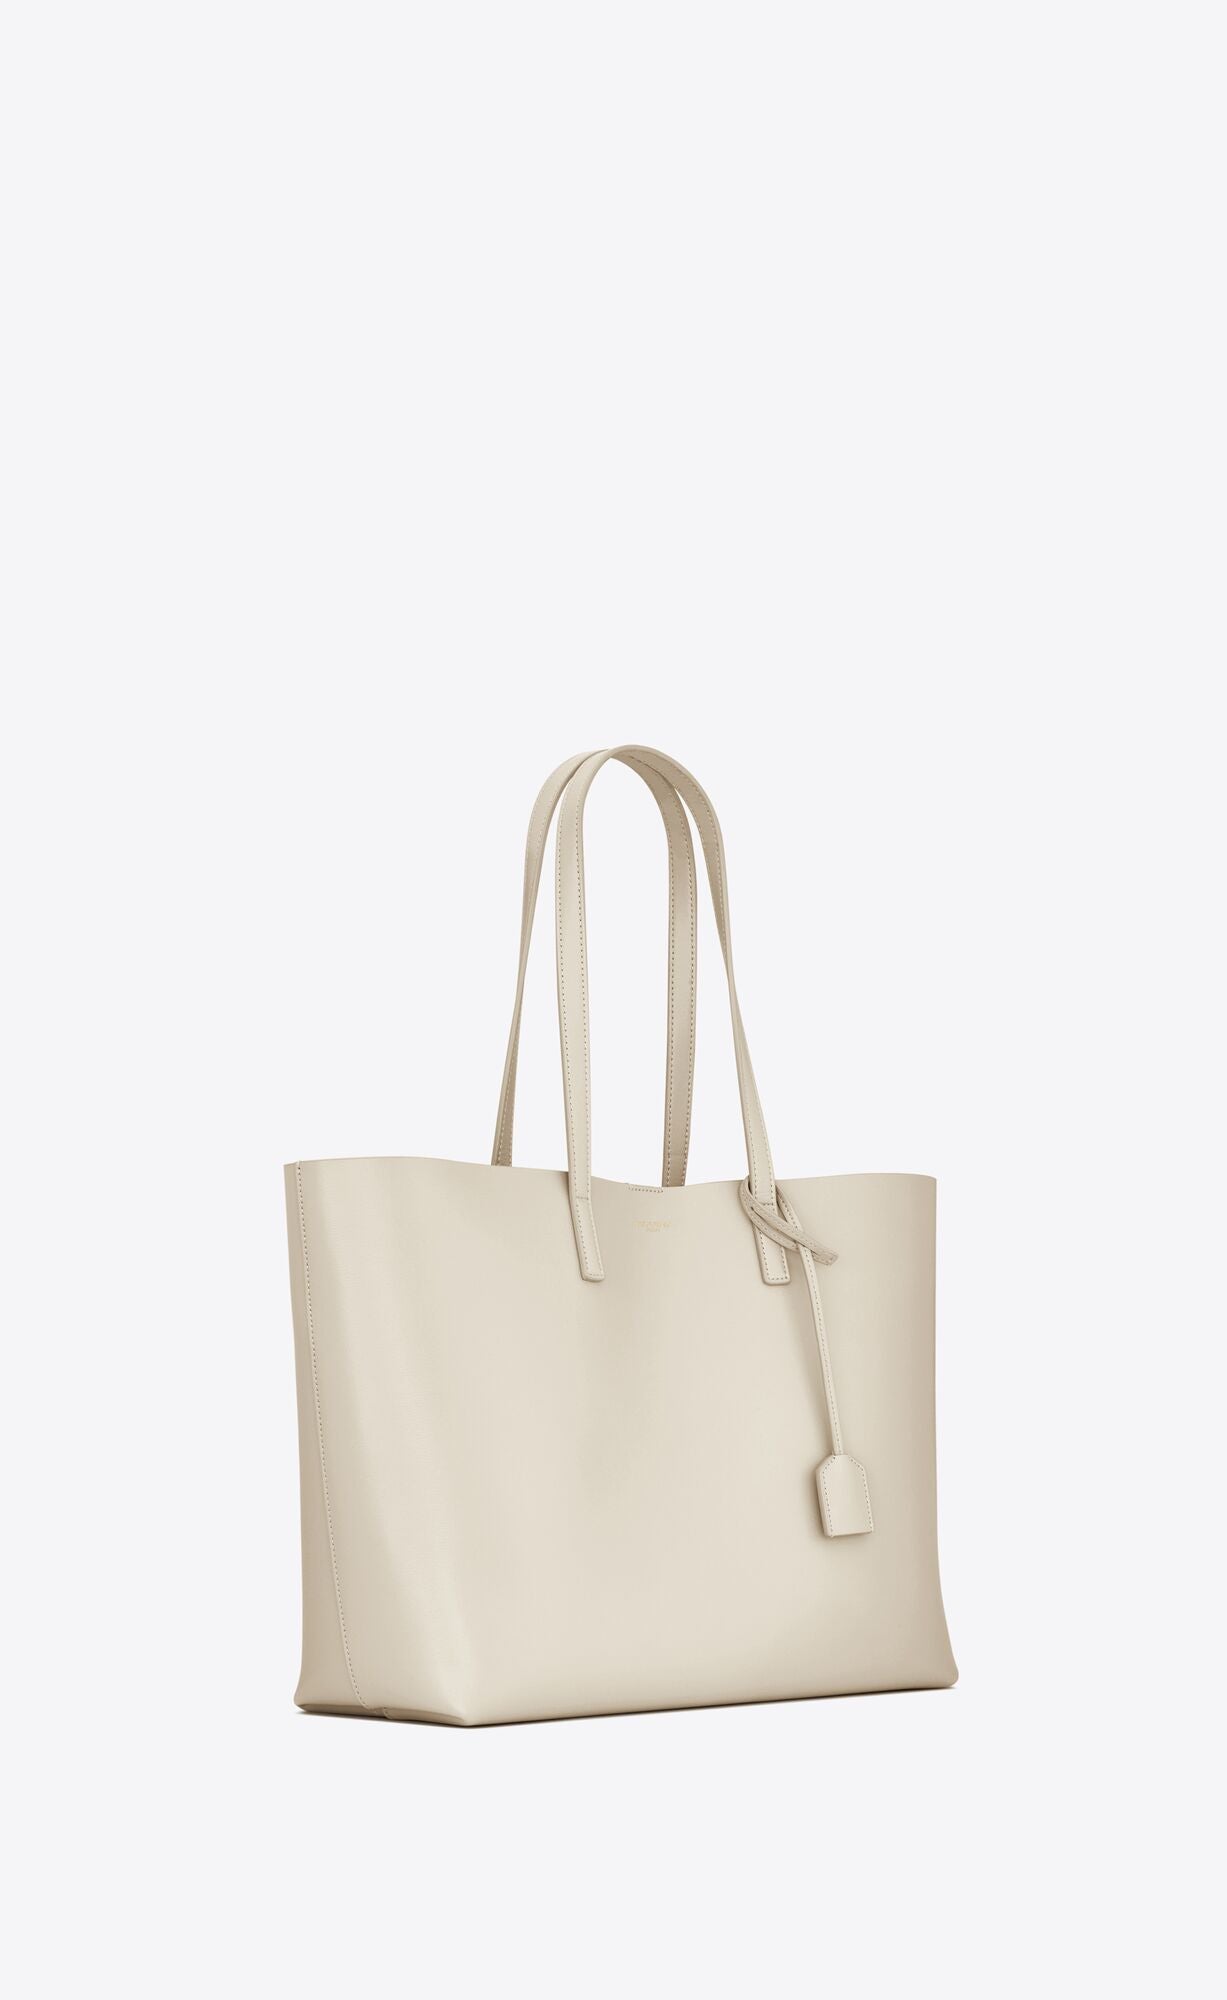 Saint Laurent White Calf Leather Tote Shoulder Bag | Fashionsarah.com